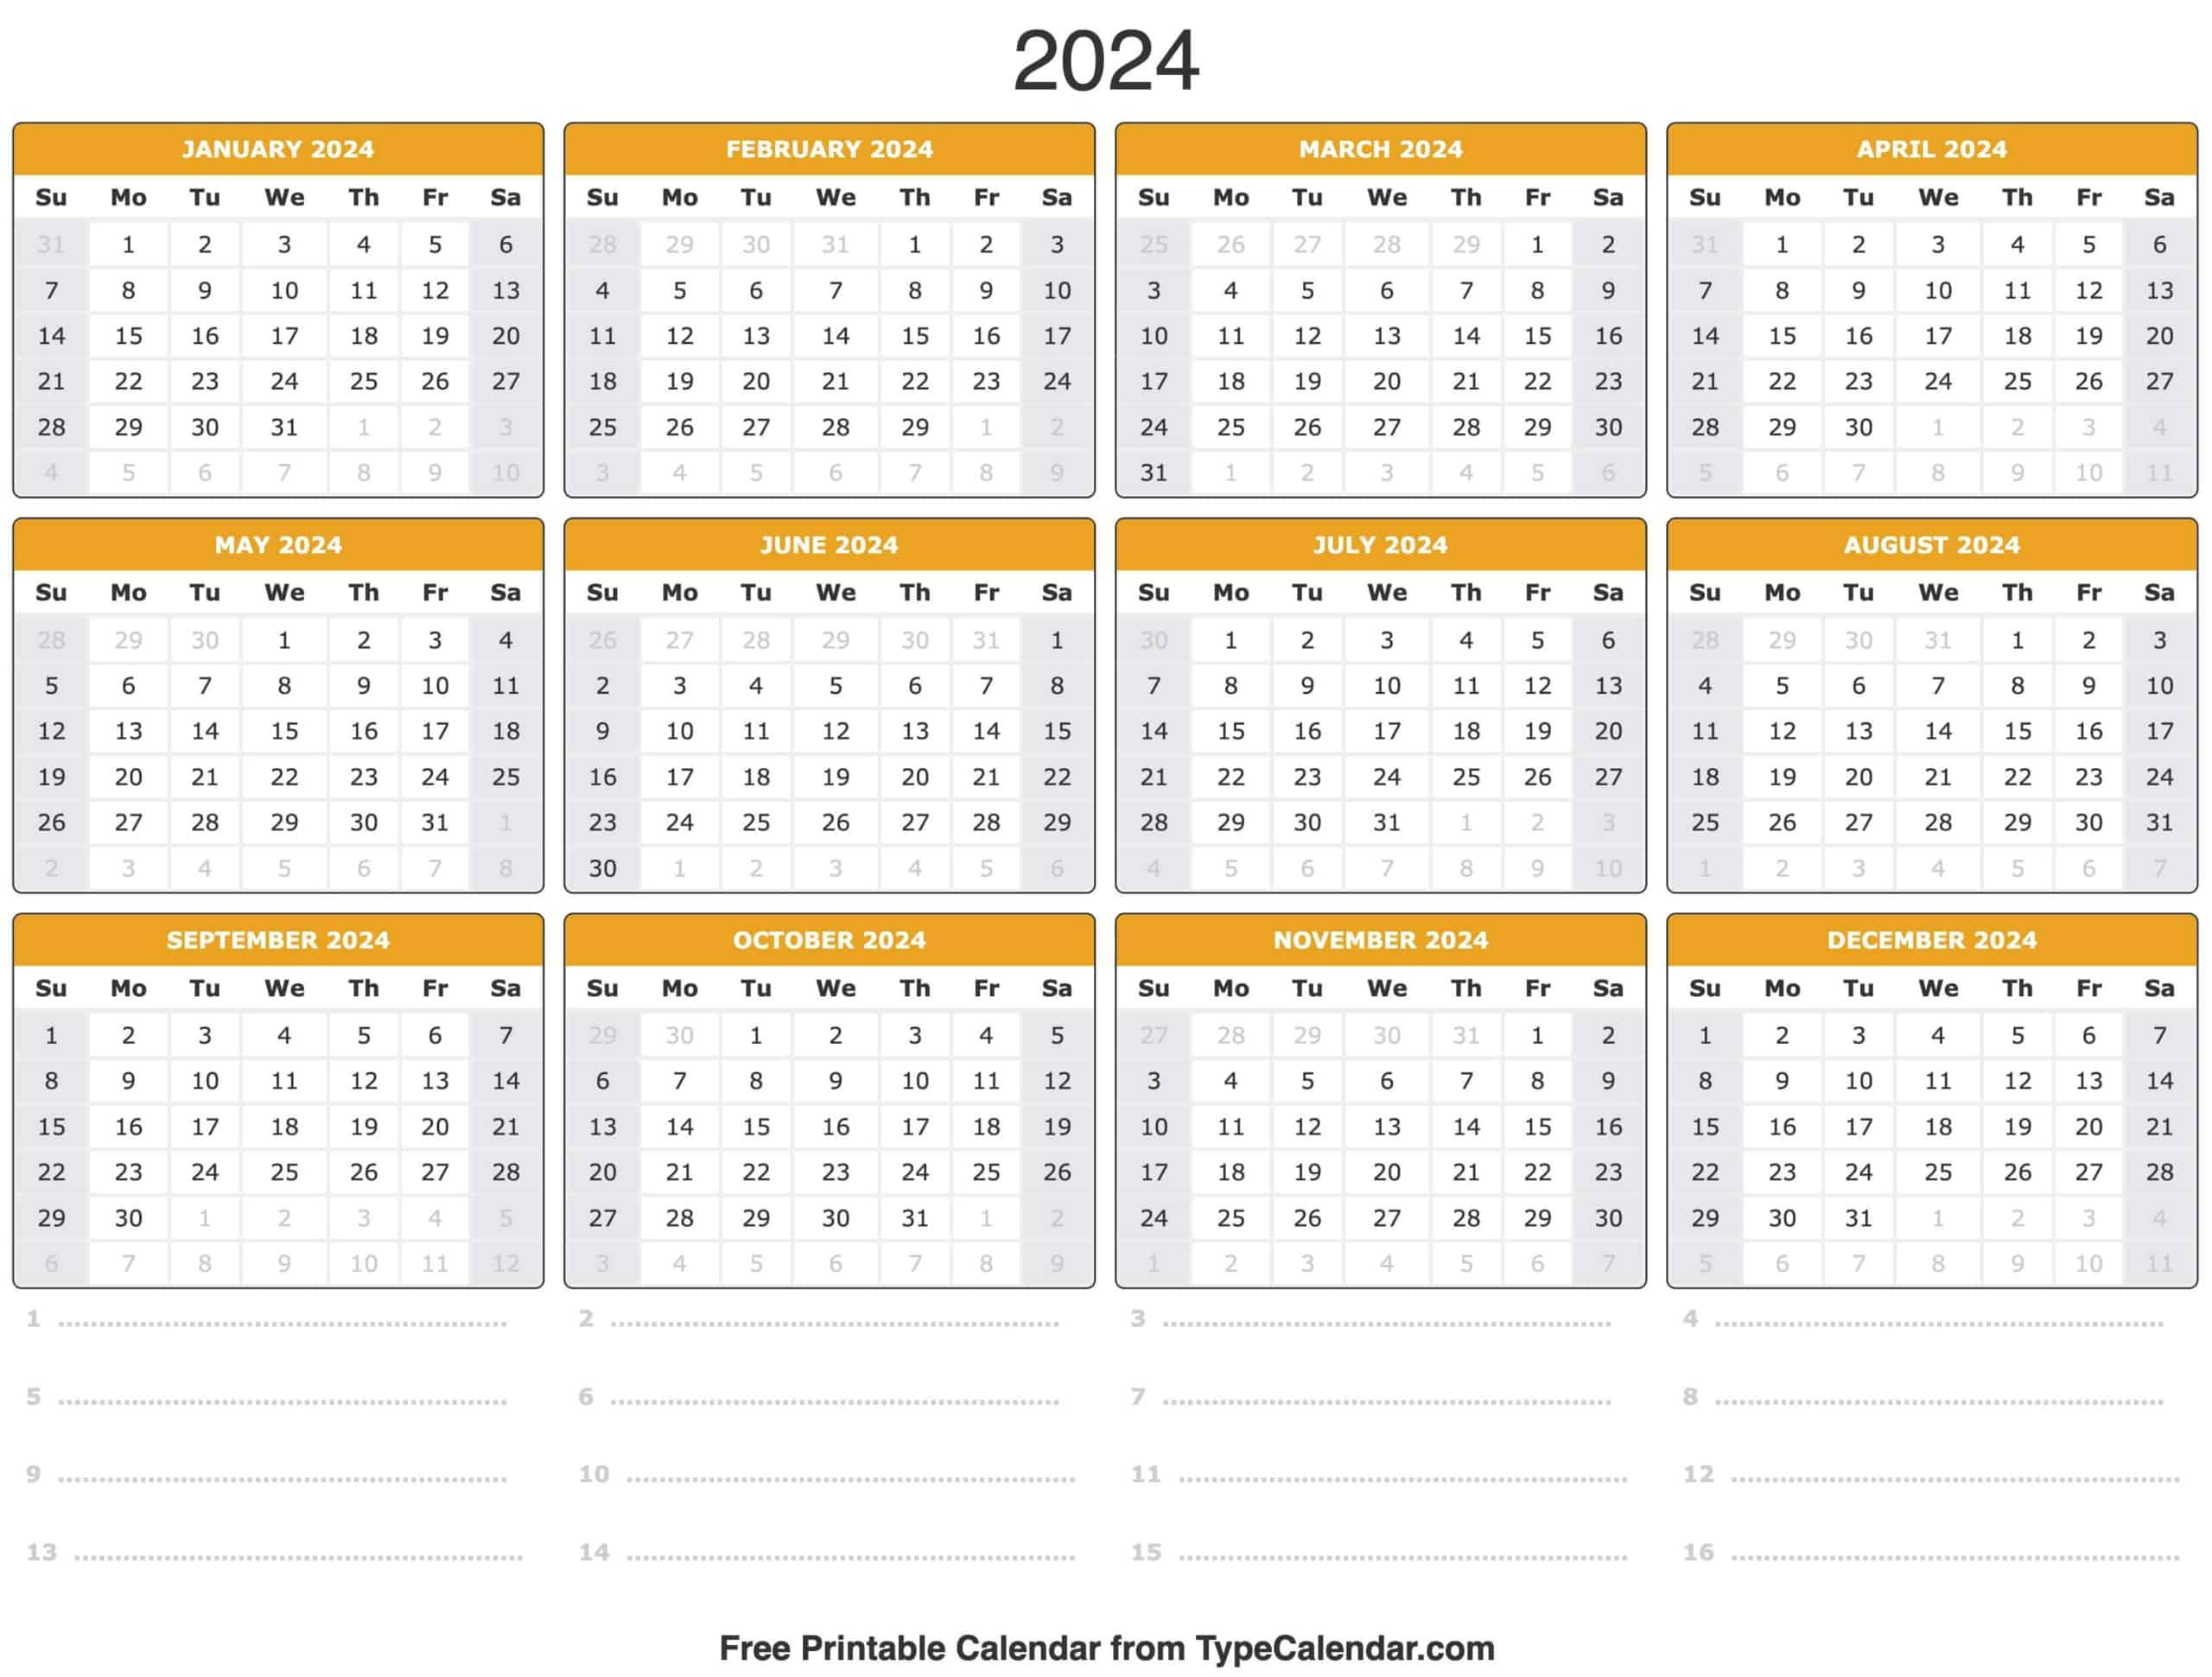 2024 Calendar: Free Printable Calendar With Holidays | Timeanddate Printable Calendar 2024